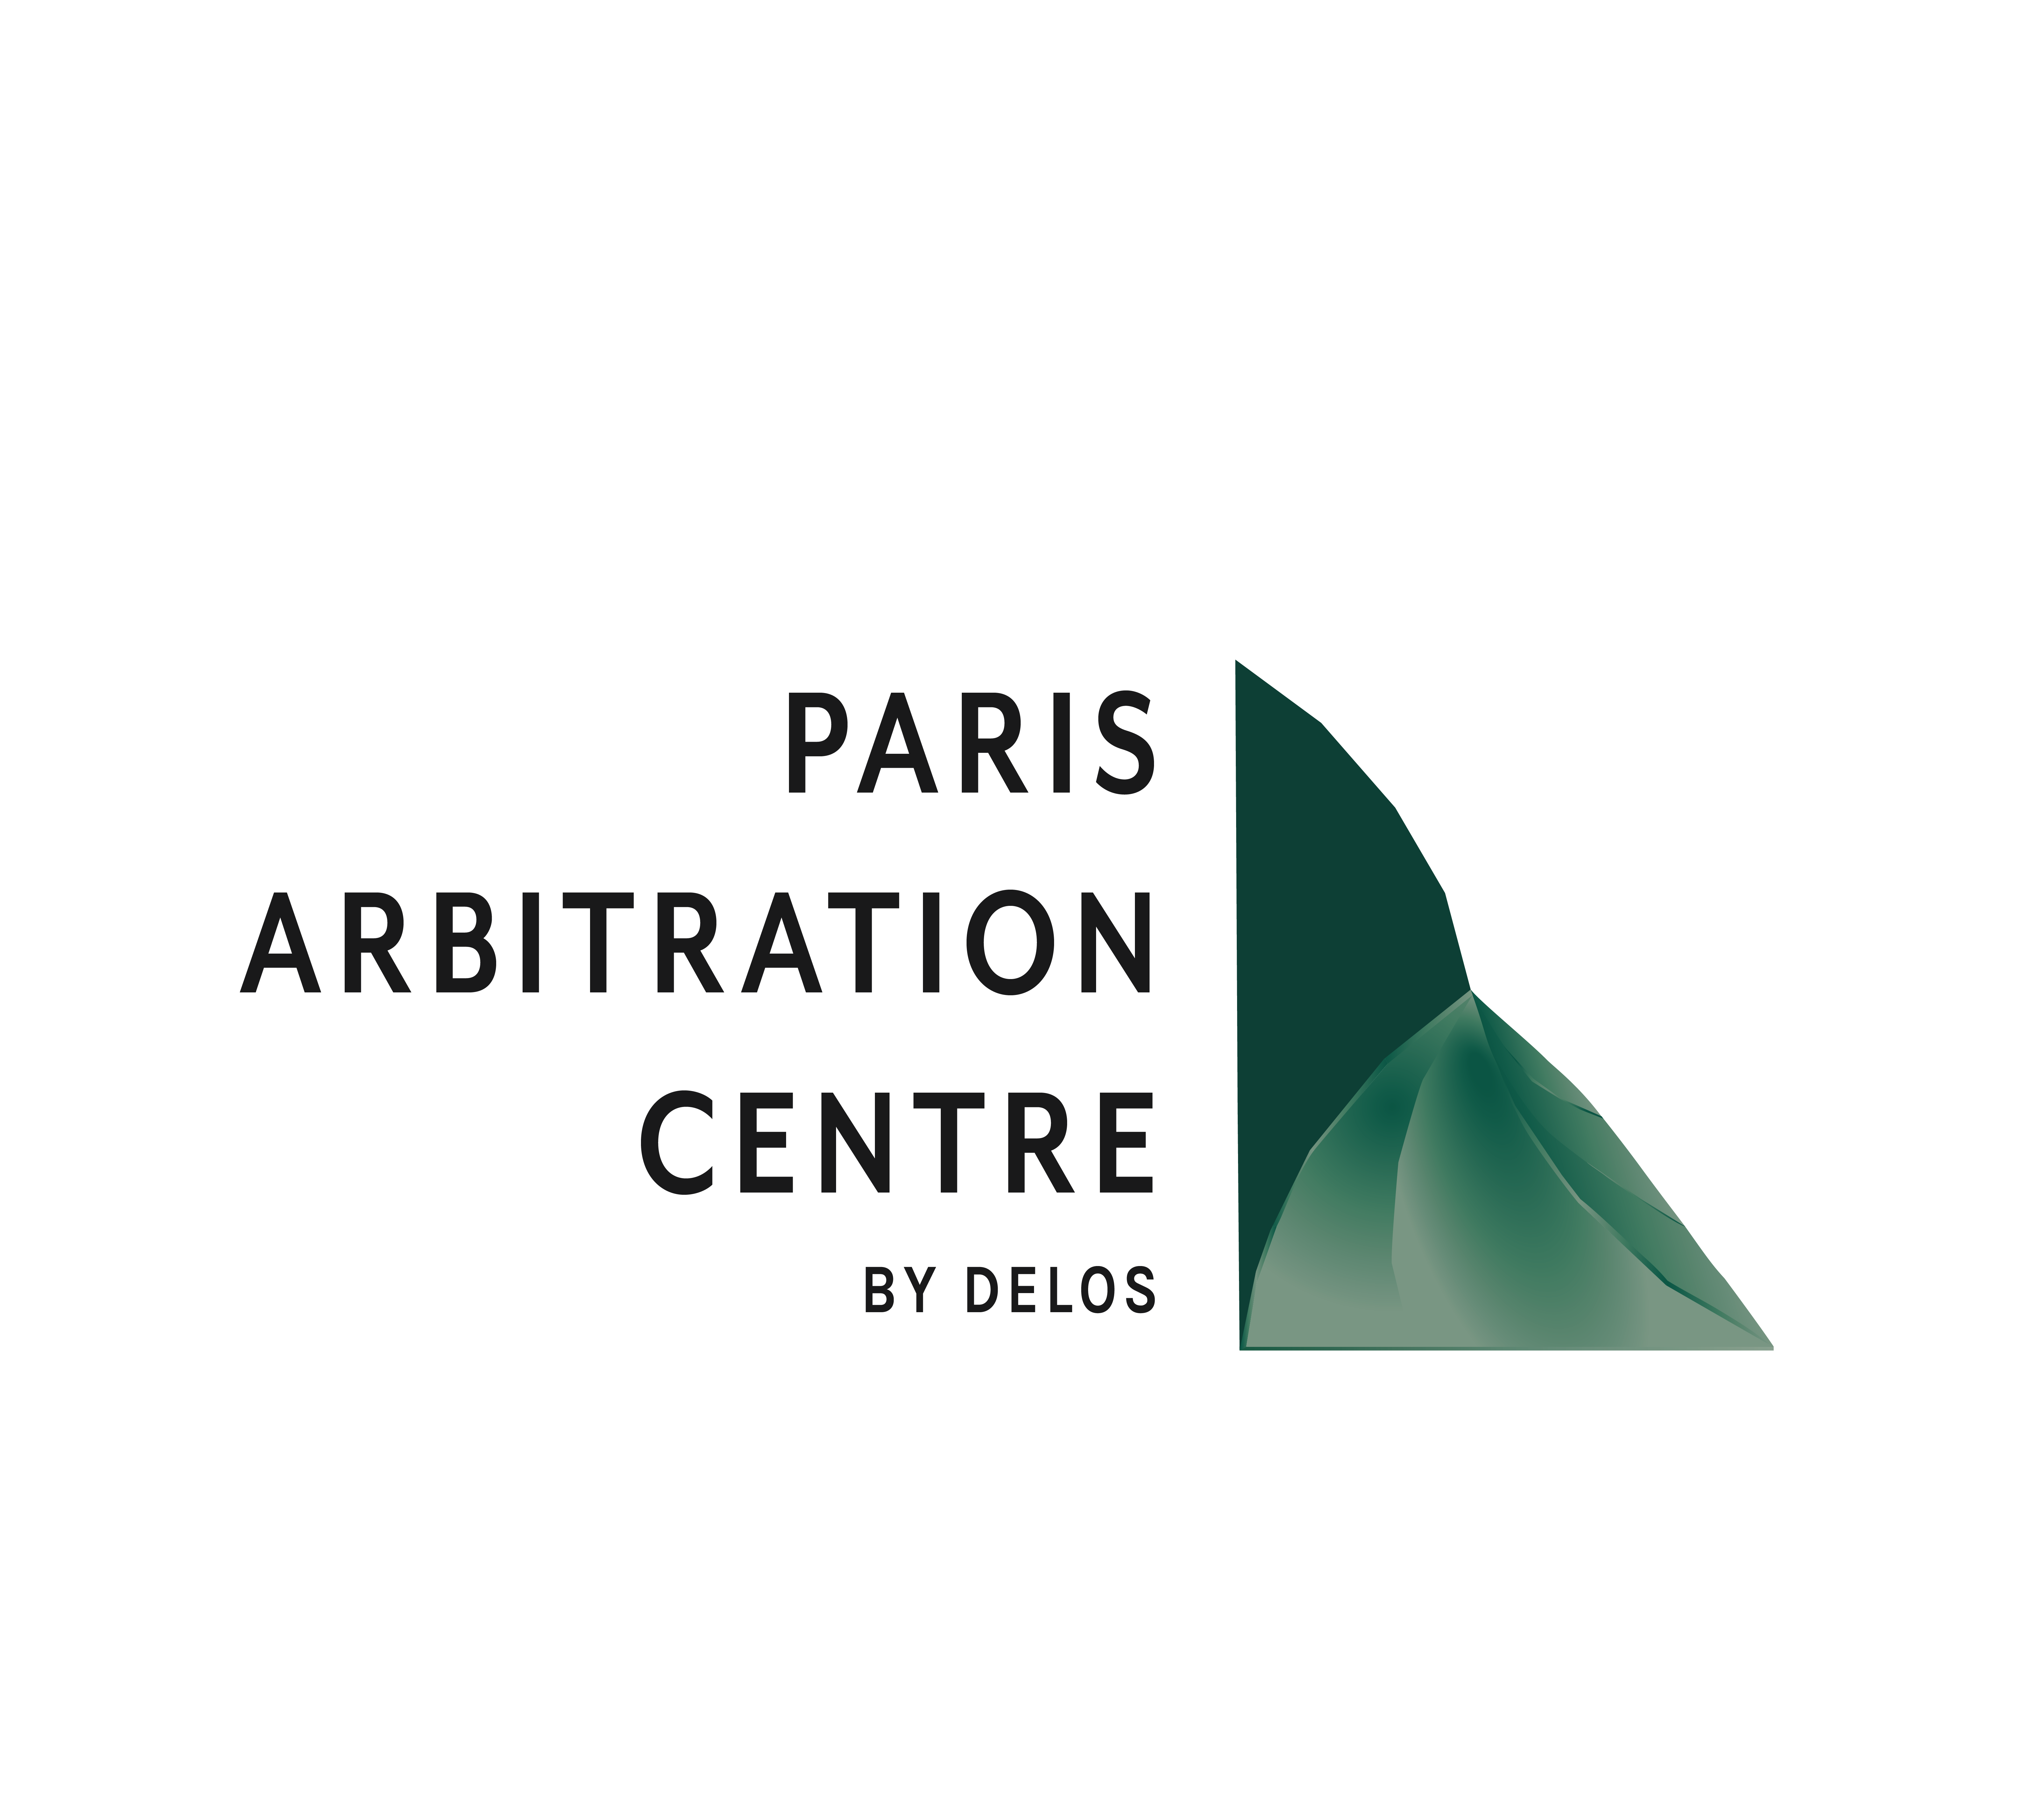 Paris Arbitration Centre | By Delos